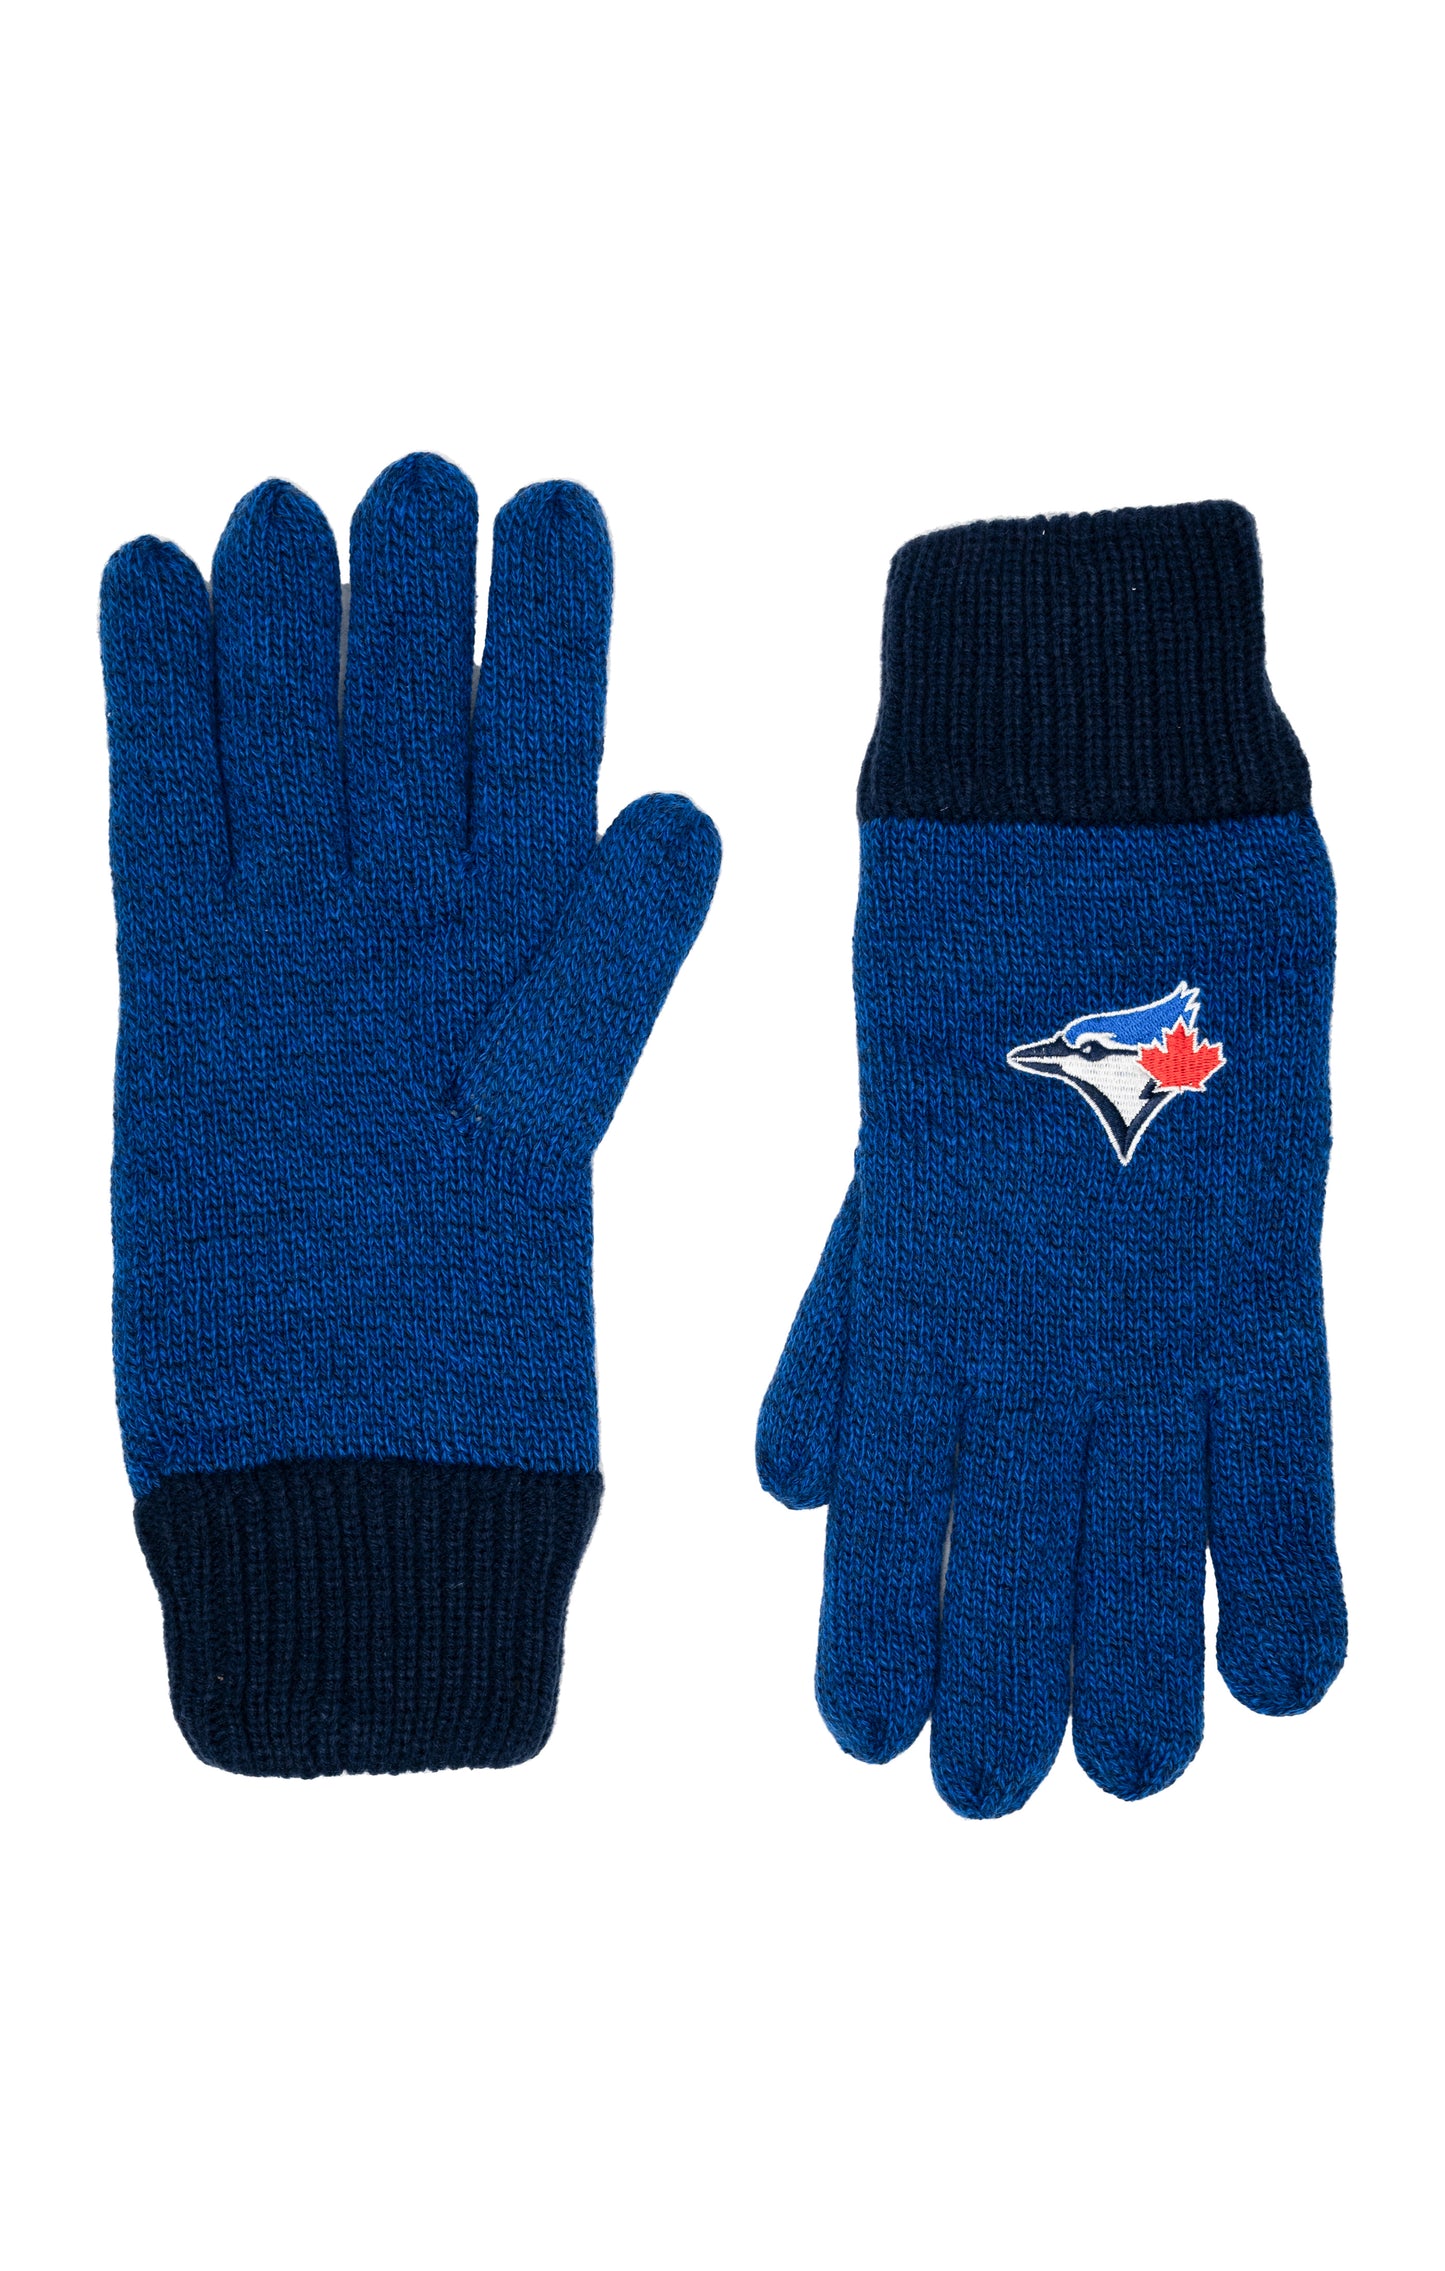 MLB Toronto Blue Jays Adult Men's Thermal Lined Gloves